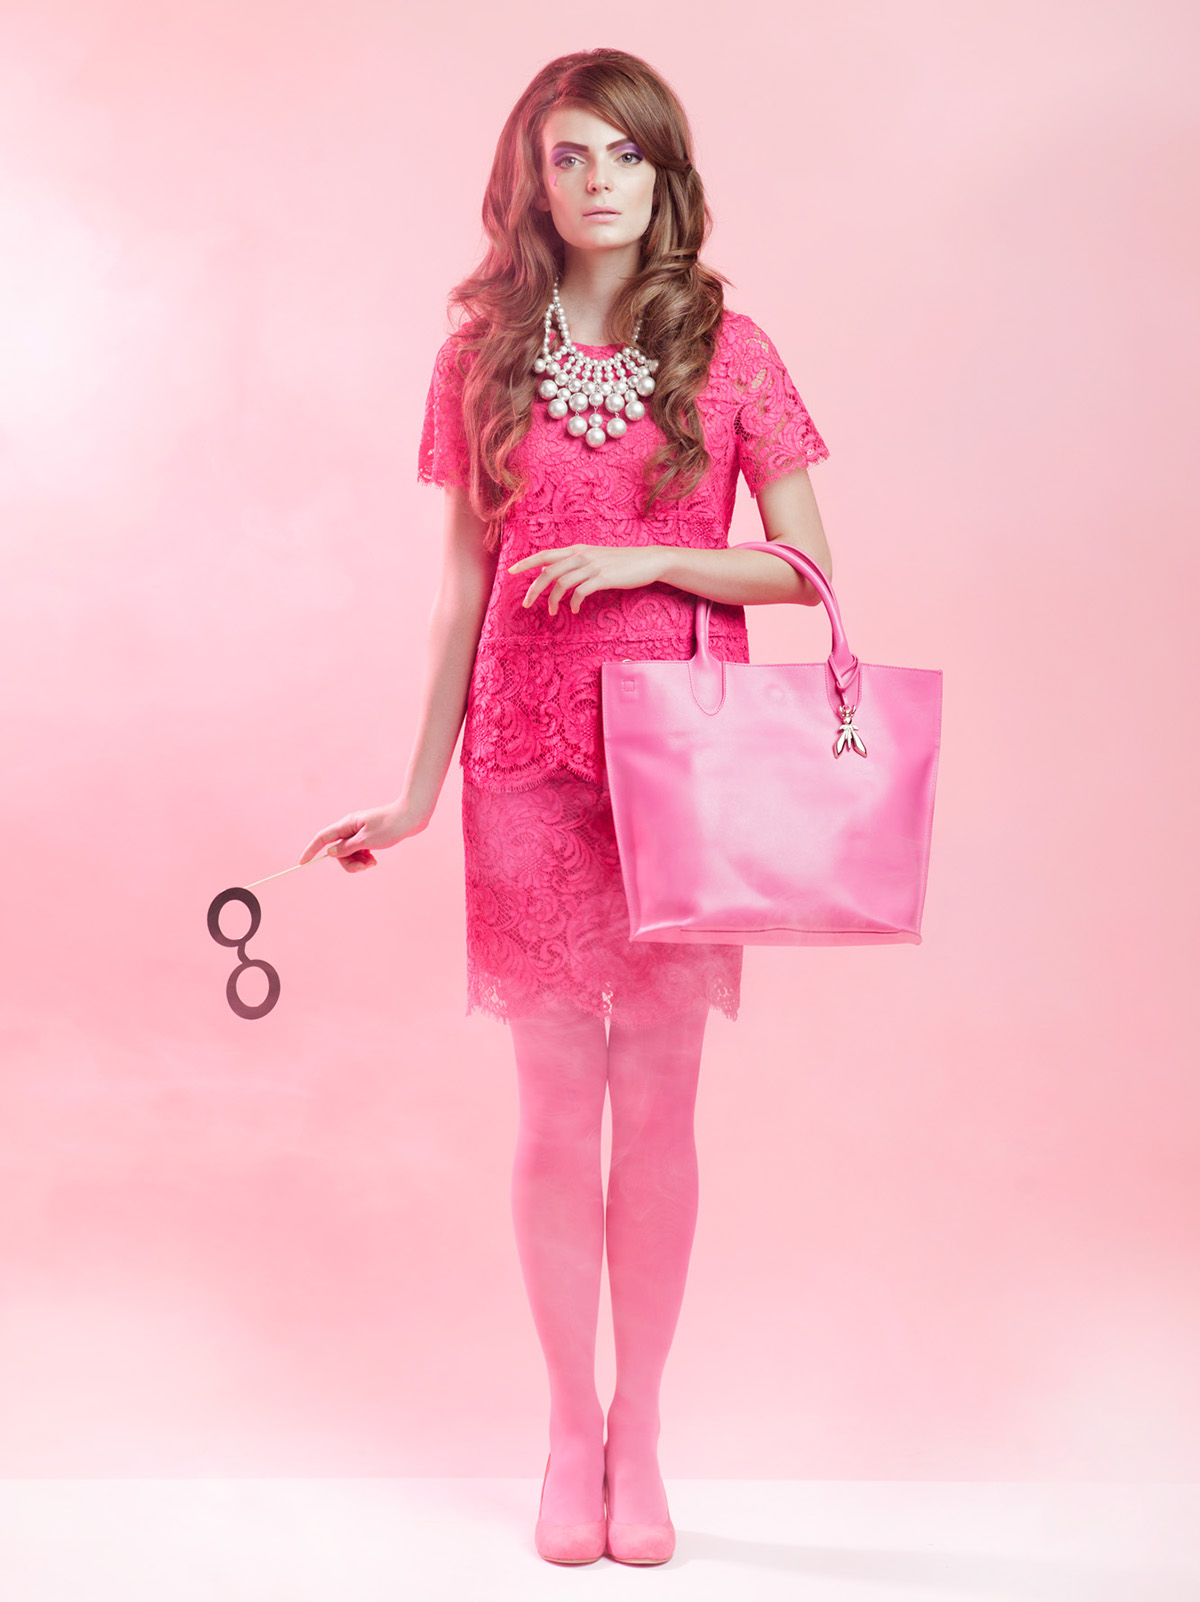 Elle bulgaria Momchil Hristov Antonia Yordanova Nora Shopova pink clothes Style smoke December beauty face couture shoot Original